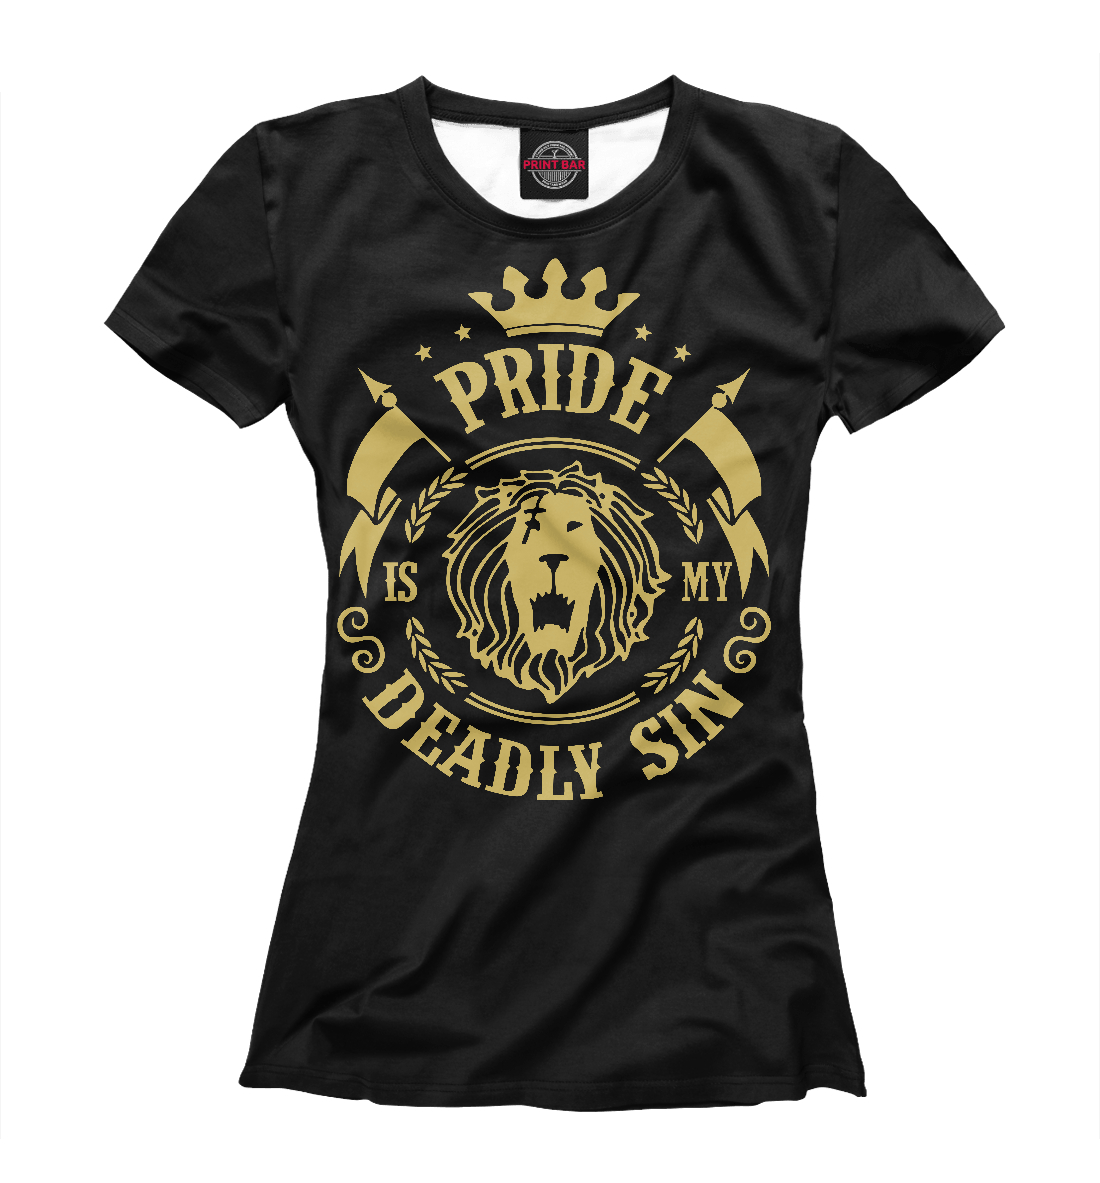 Футболка Pride is my sin для женщин, артикул: ANR-478445-fut-1mp